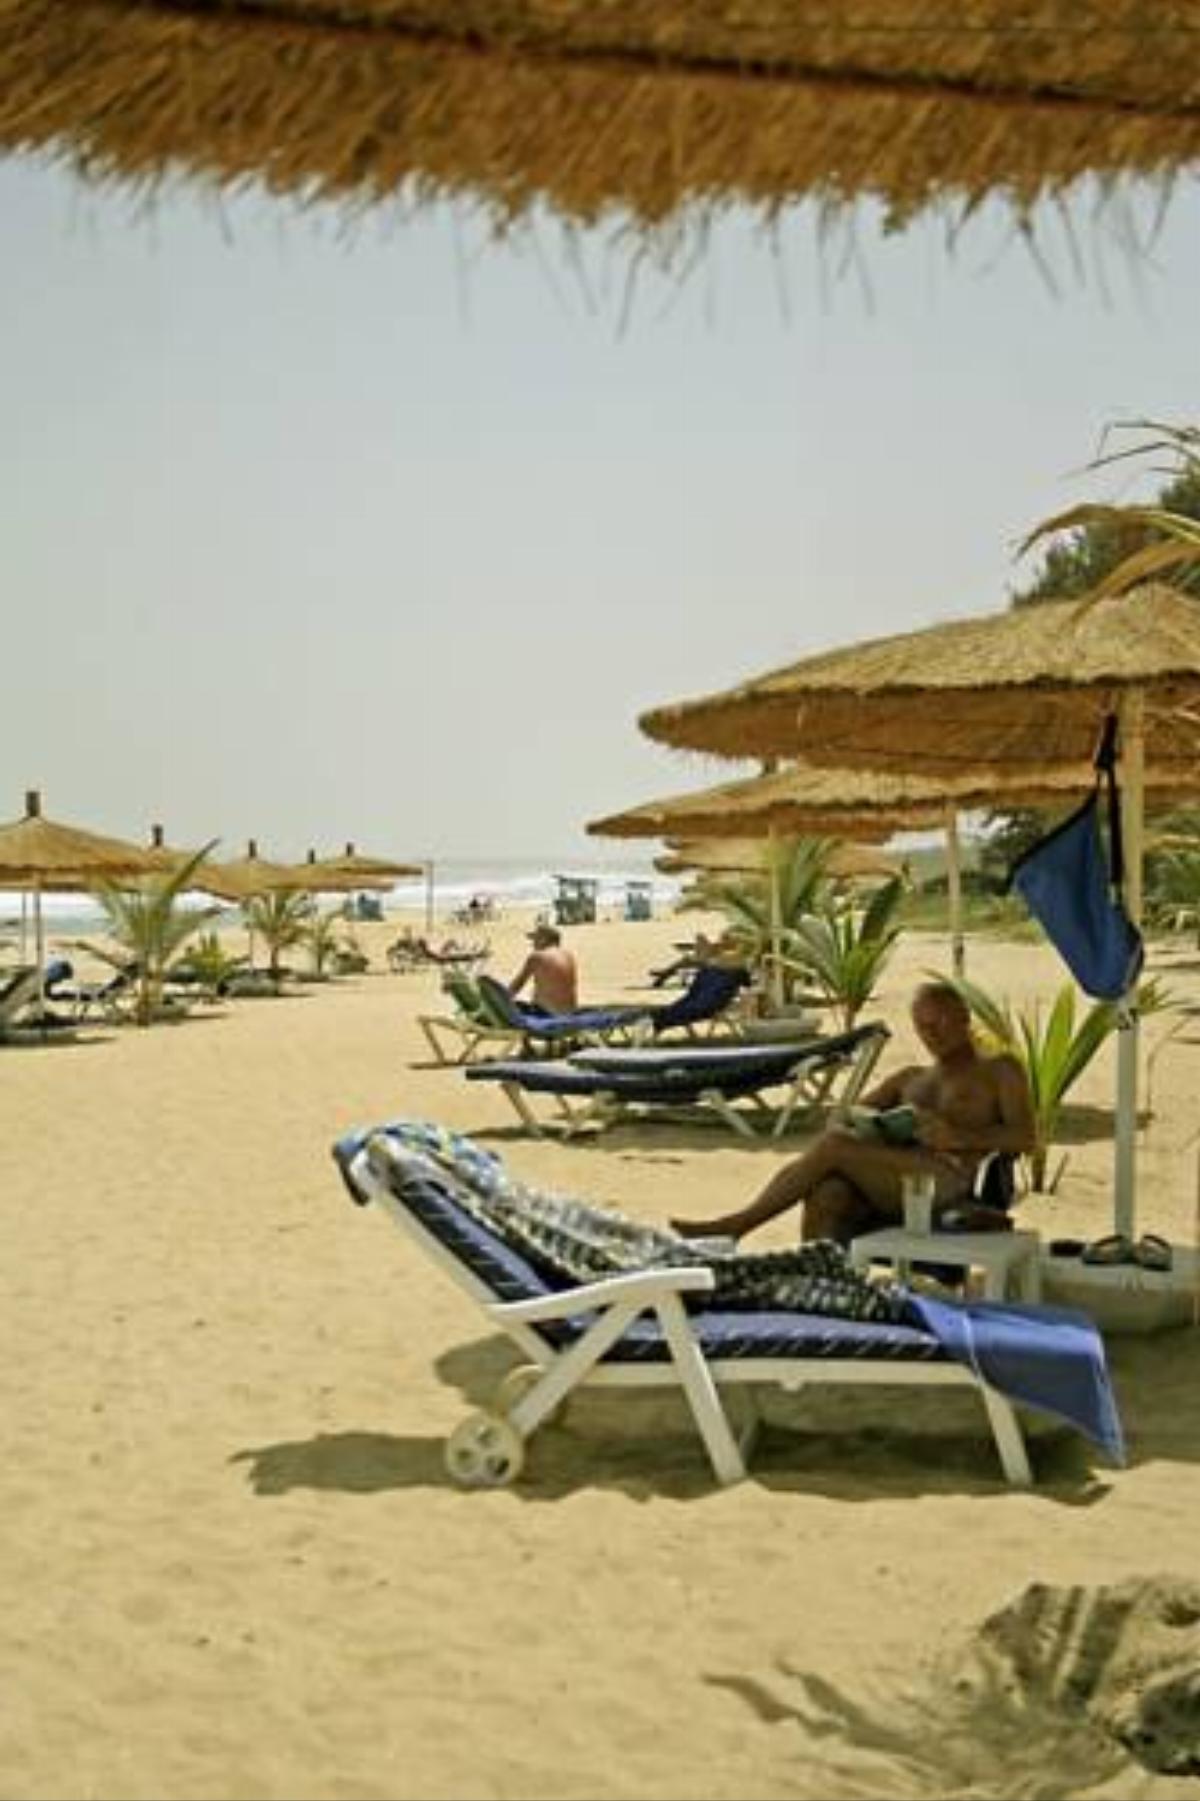 The Kairaba Beach Hotel Hotel Kololi Gambia